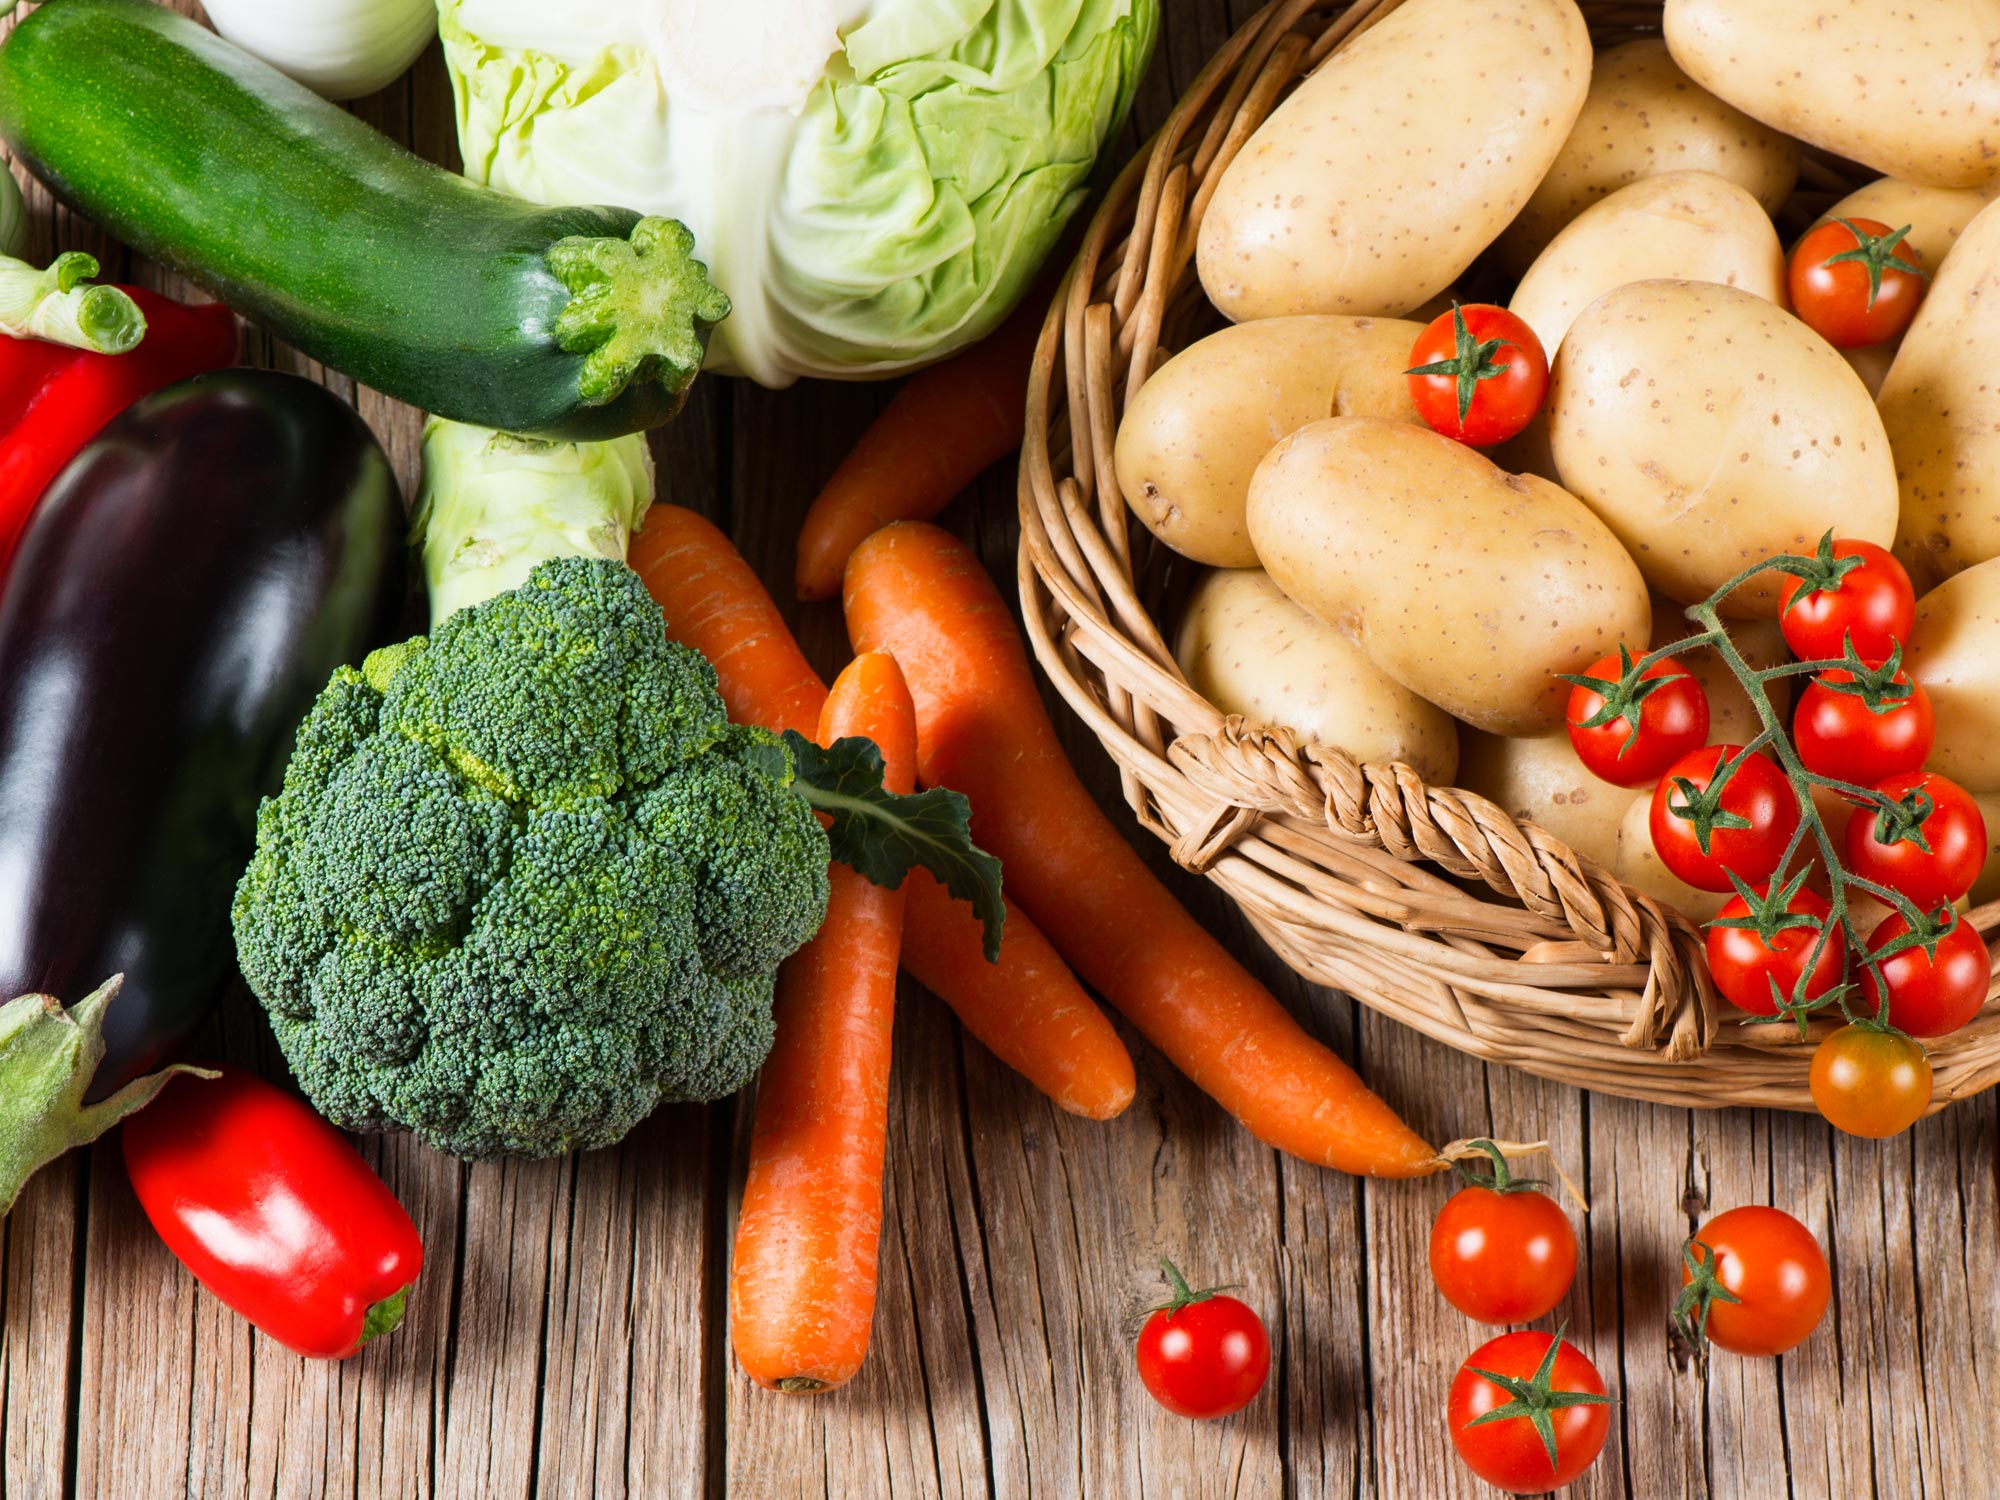 America’s most-eaten vegetable leads to hypertension